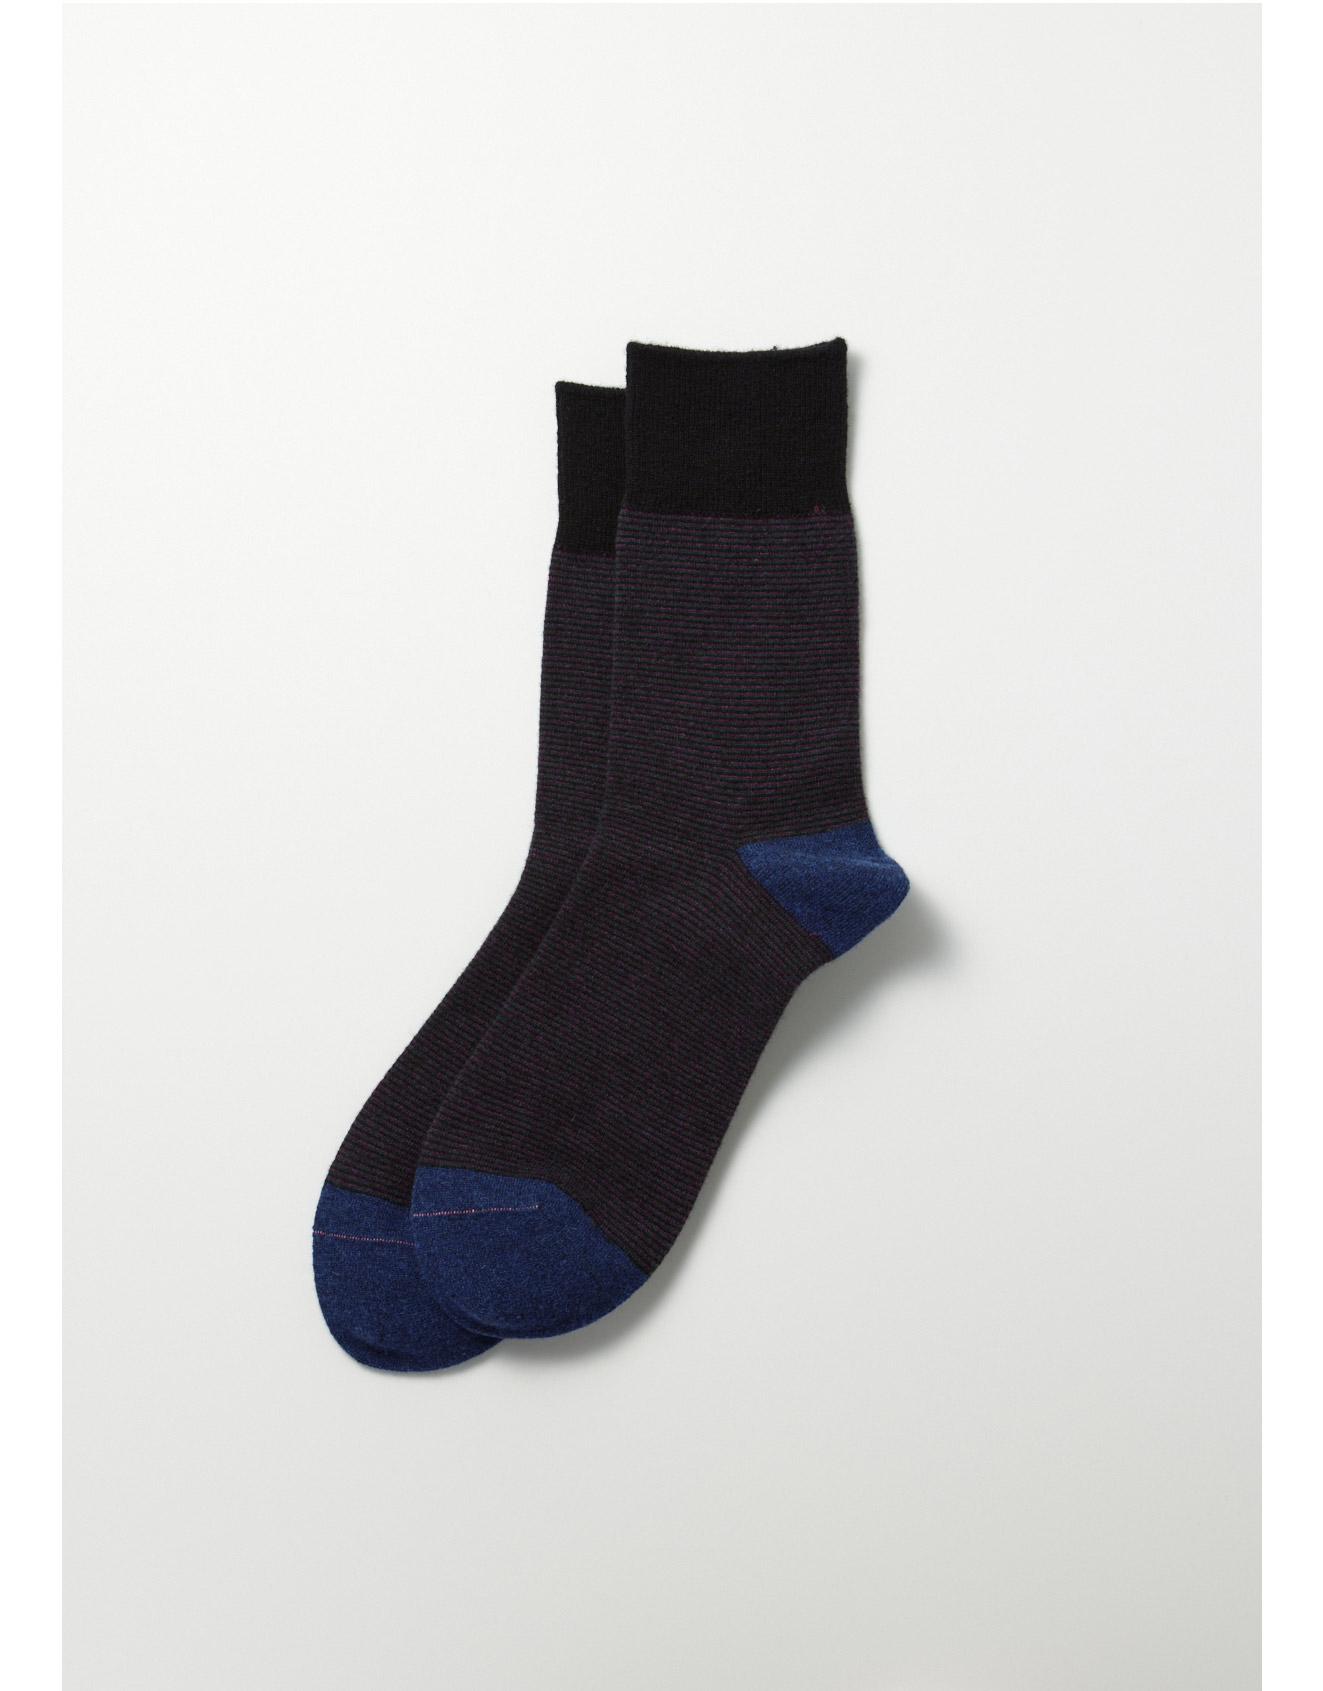 RoToTo – Woolen Retro OD Stripe Socks